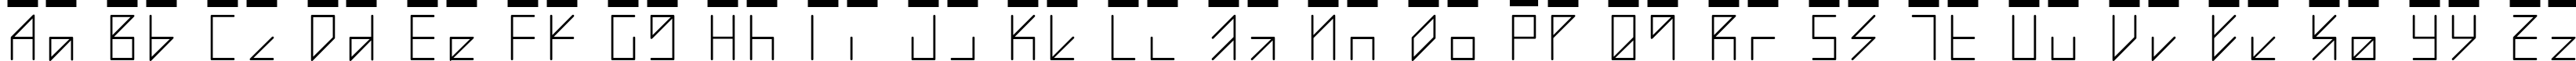 Пример написания английского алфавита шрифтом Pechkin